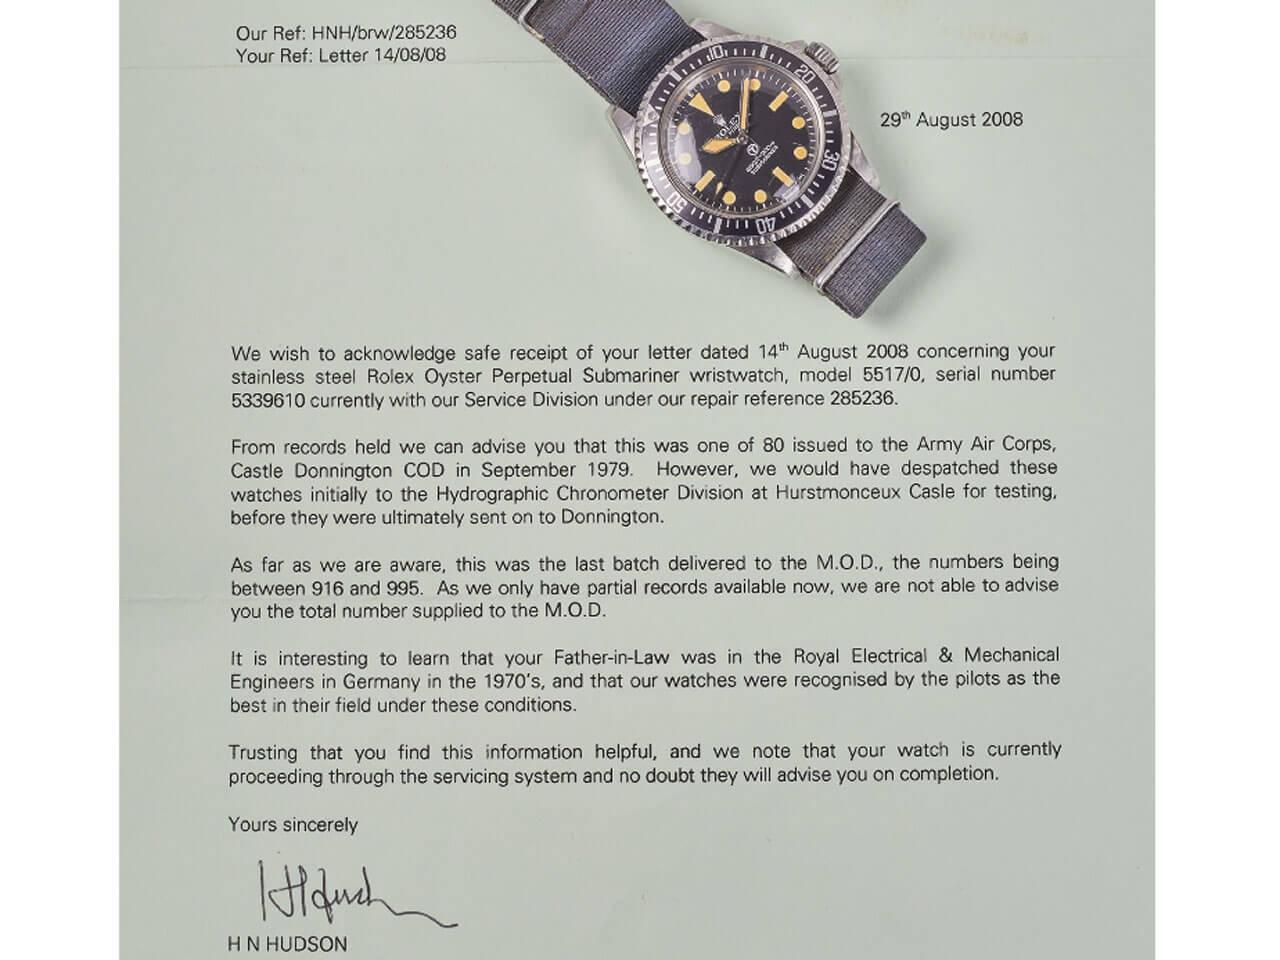 Rolex UK（Bexley）ヘンリー・ハドソン（Henry Hudson）氏のサイン入り証明書